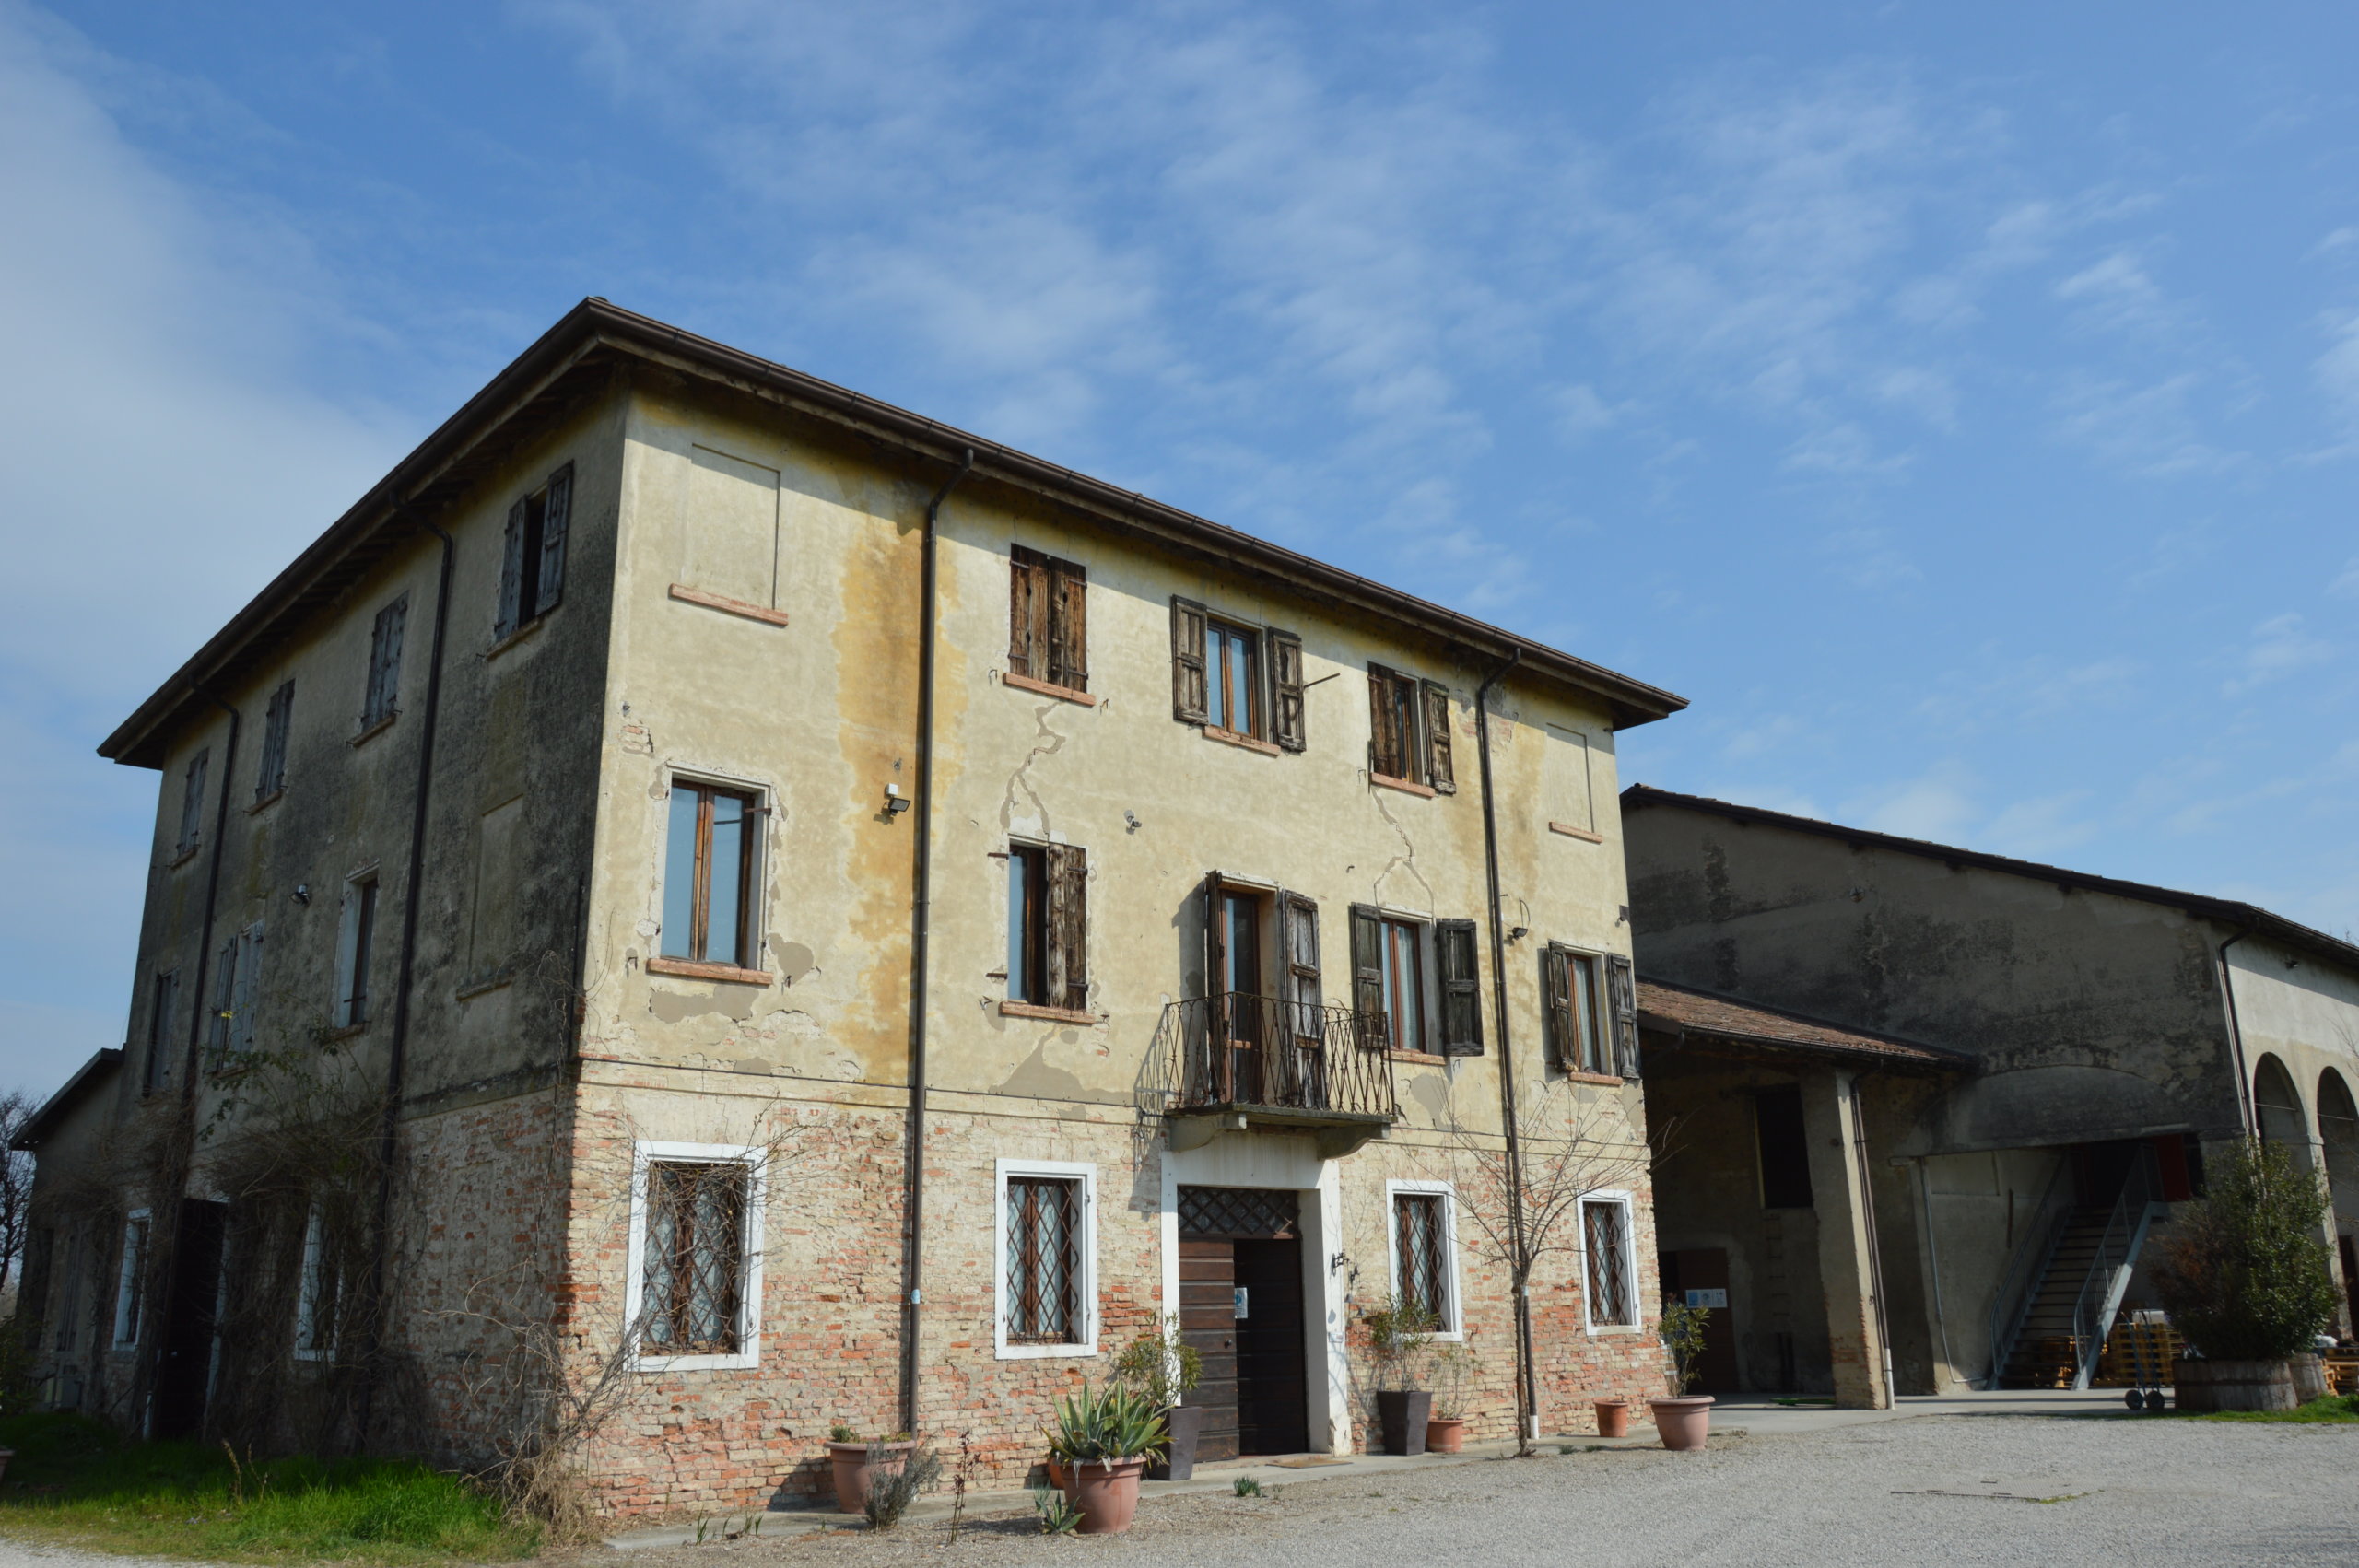 The main location of Acetaia San Giacomo in Novellara.